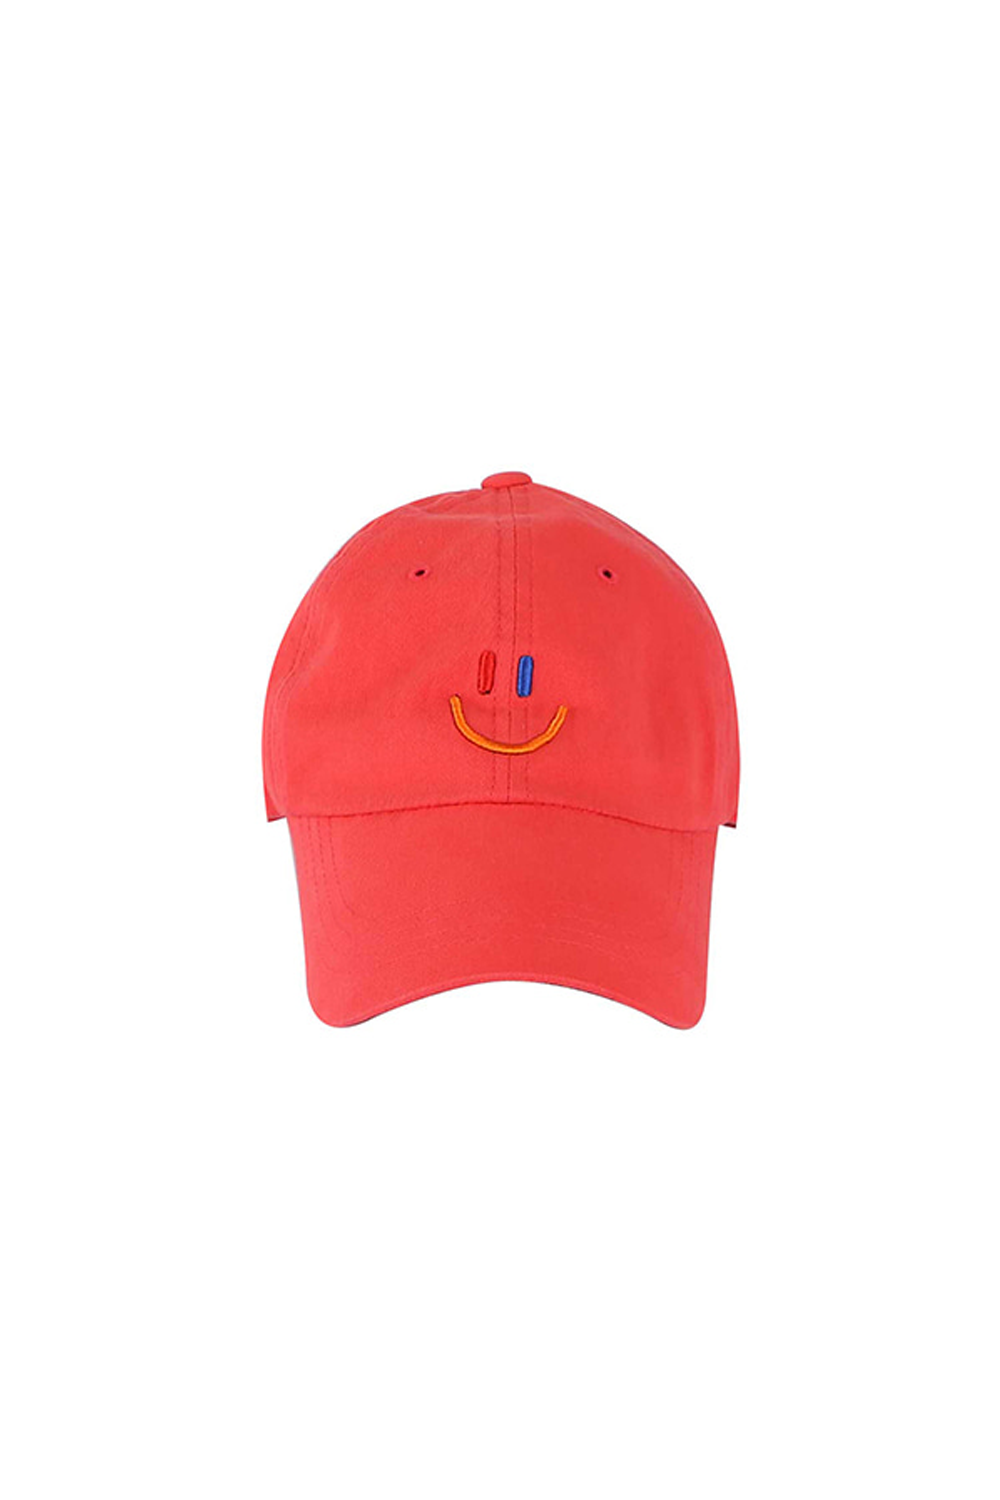 LaLa Smile Ball Cap [Red]